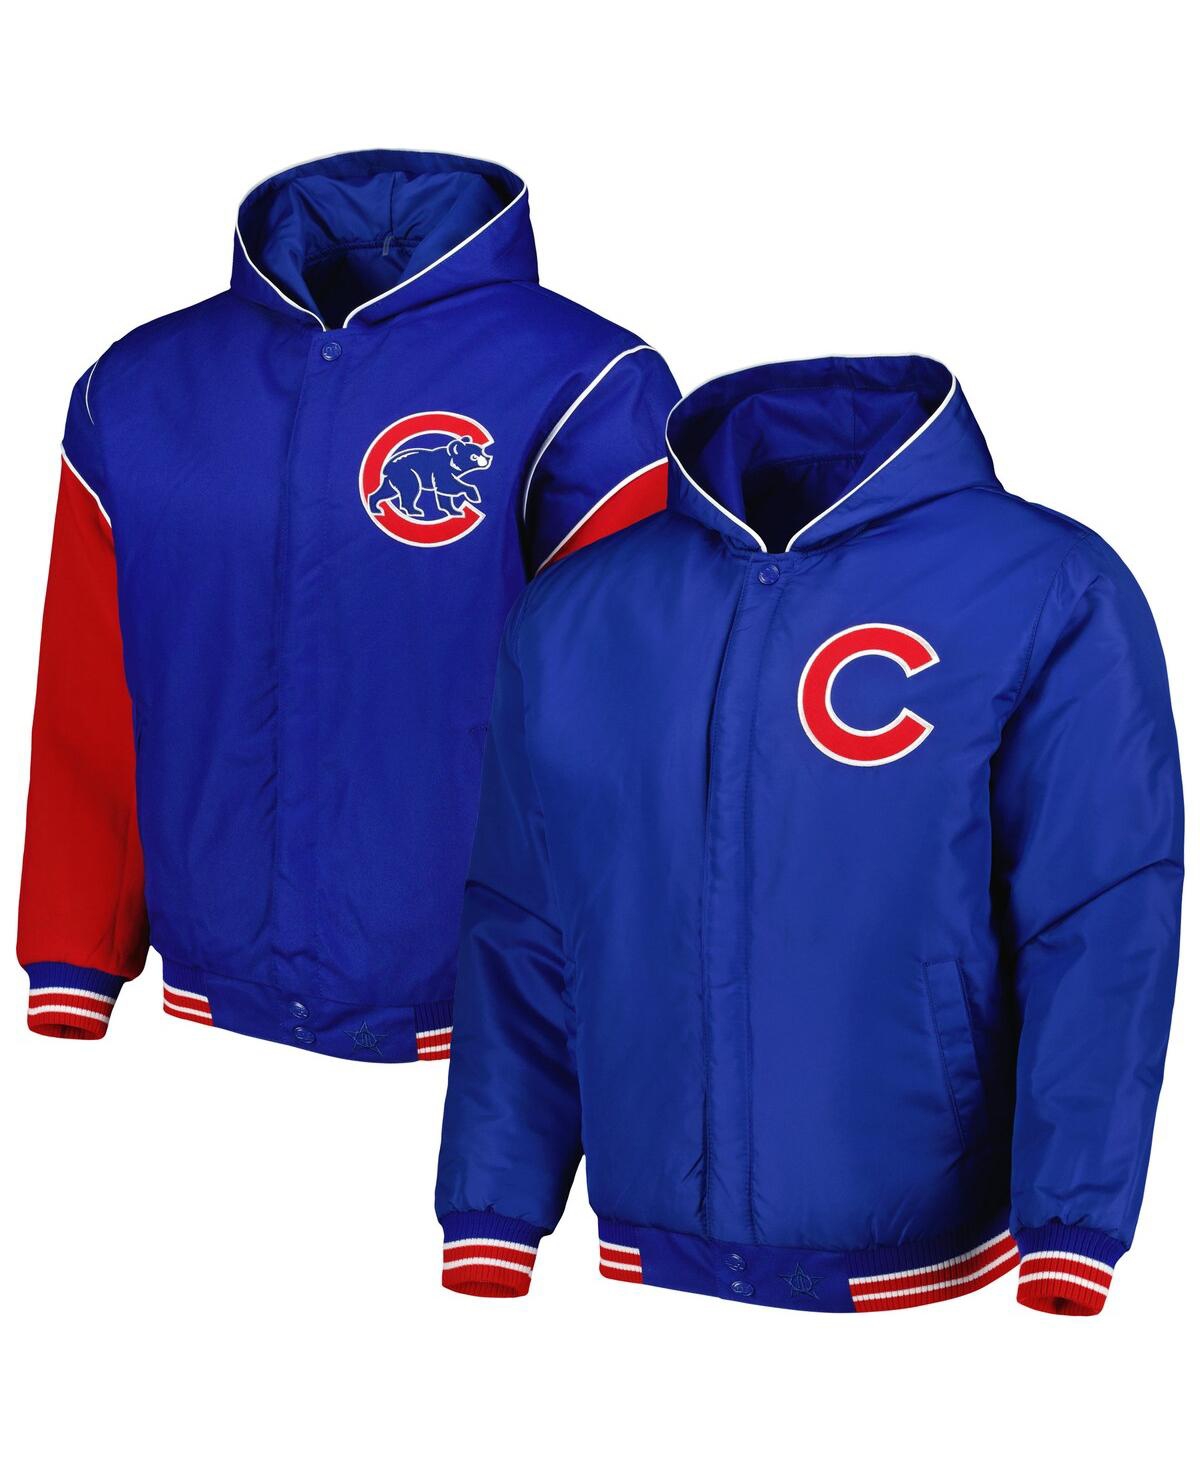 Men's Jh Design Royal Chicago Cubs Reversible Fleece Full-Snap Hoodie Jacket - Royal